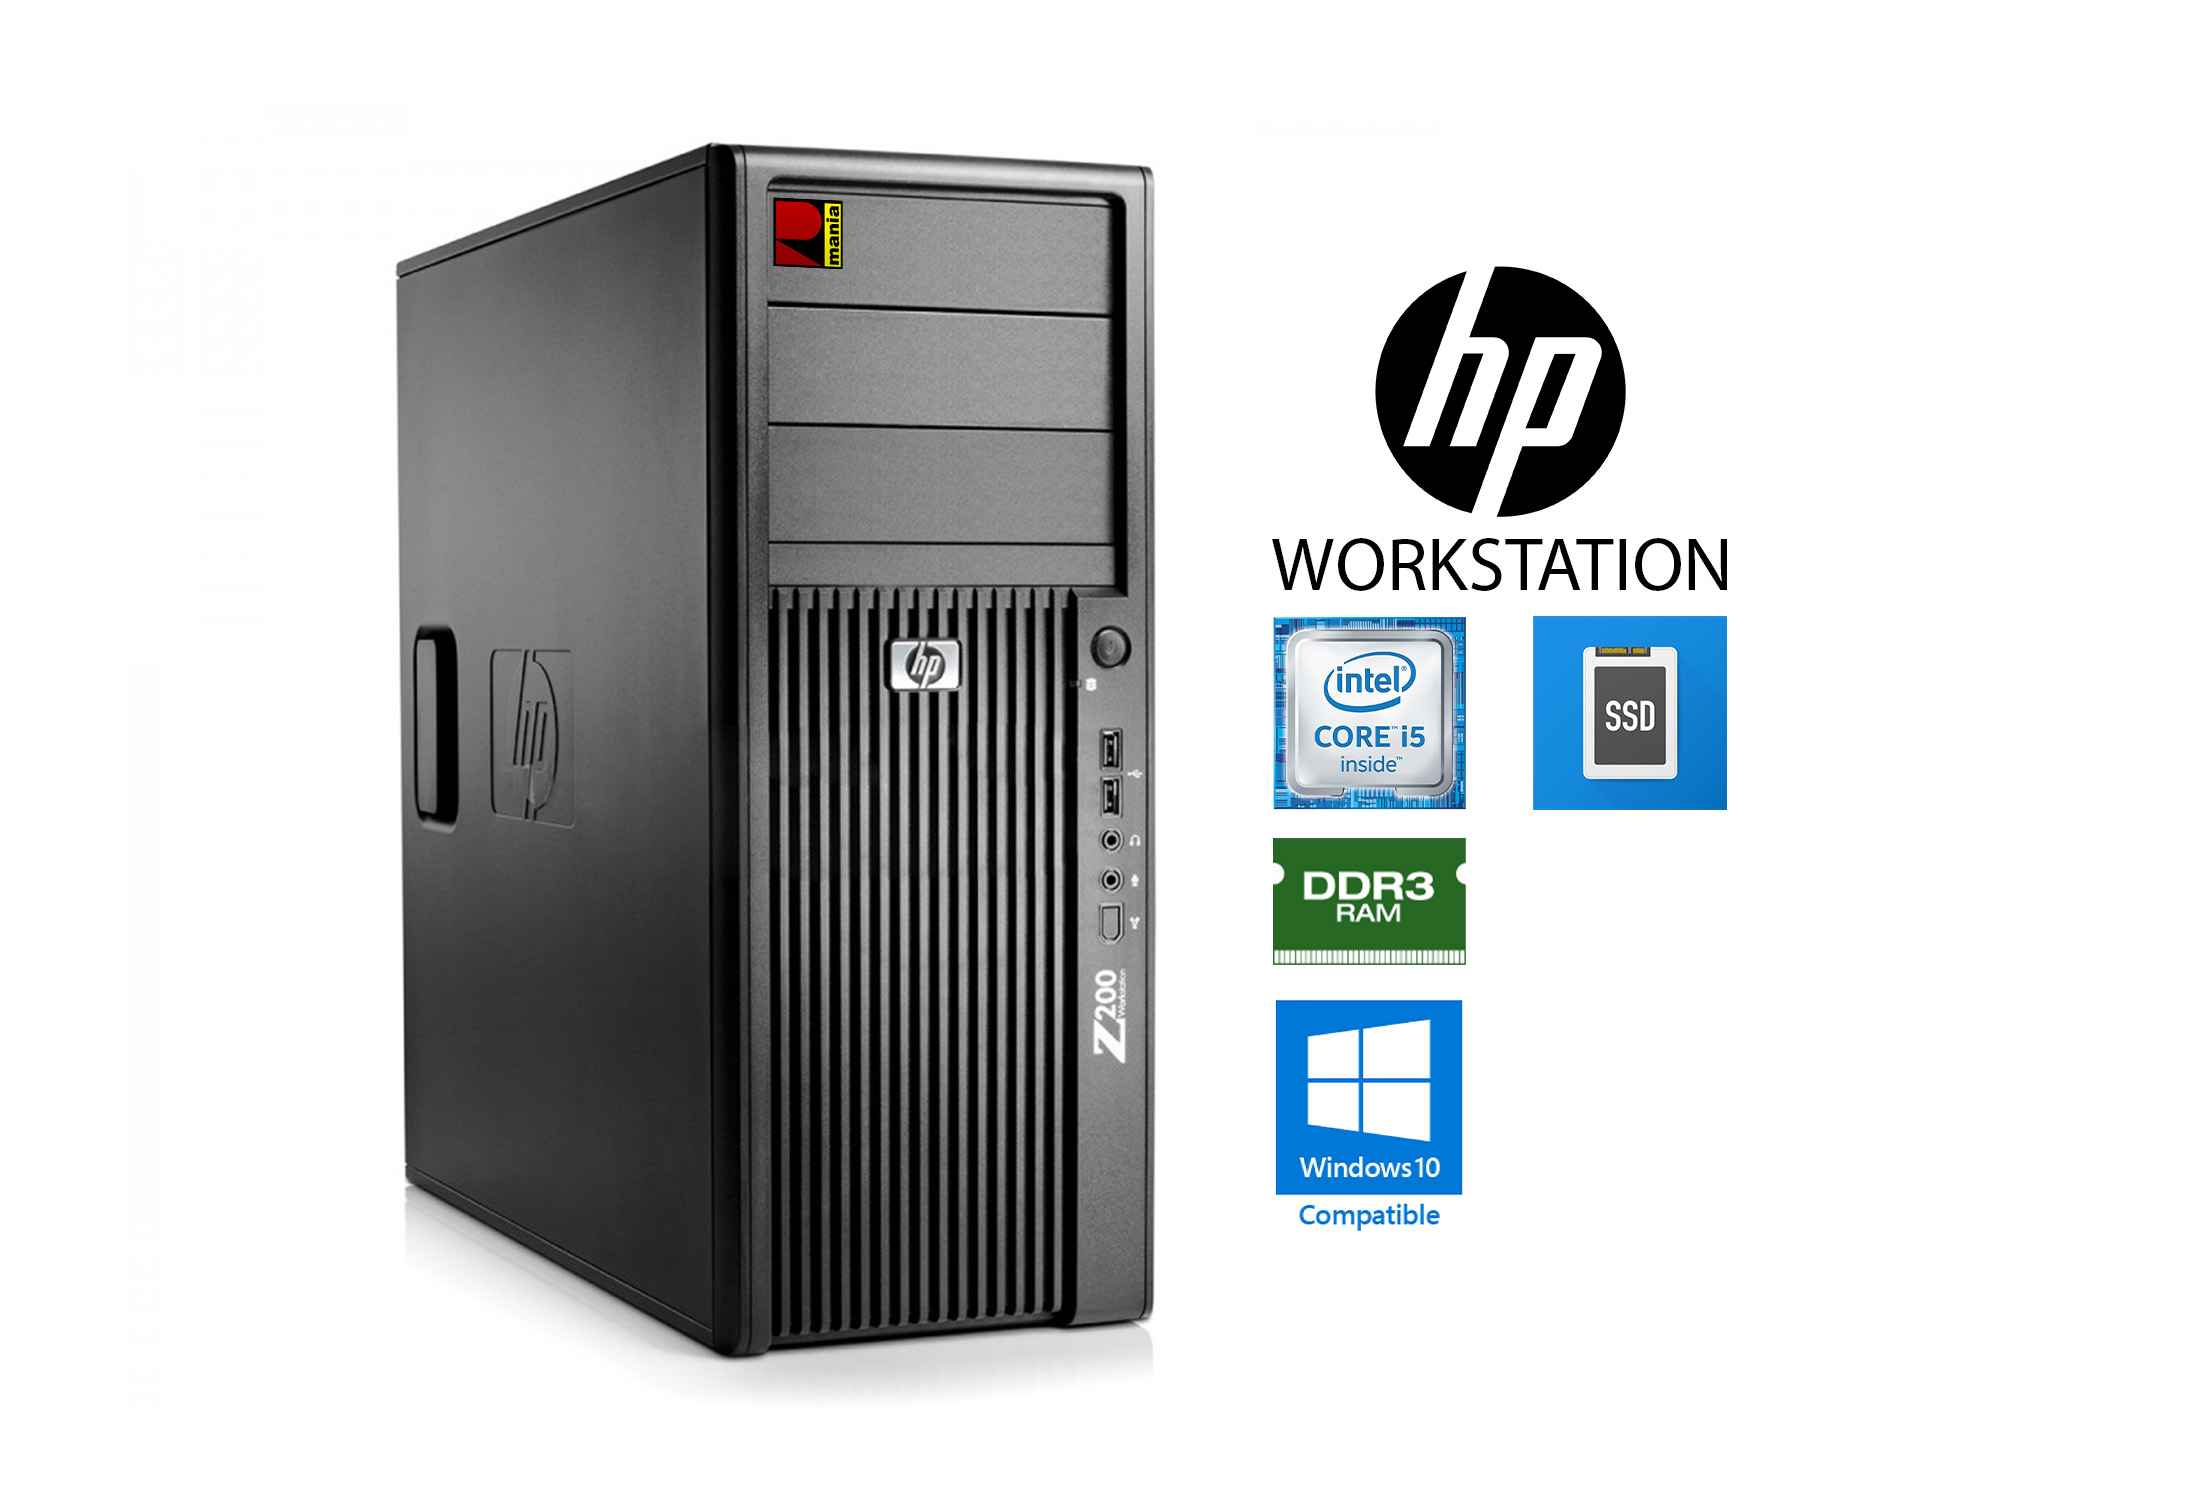 HP Z200 Workstation core i5-650 8GB RAM Quadro FX 380-ziYkh.jpeg